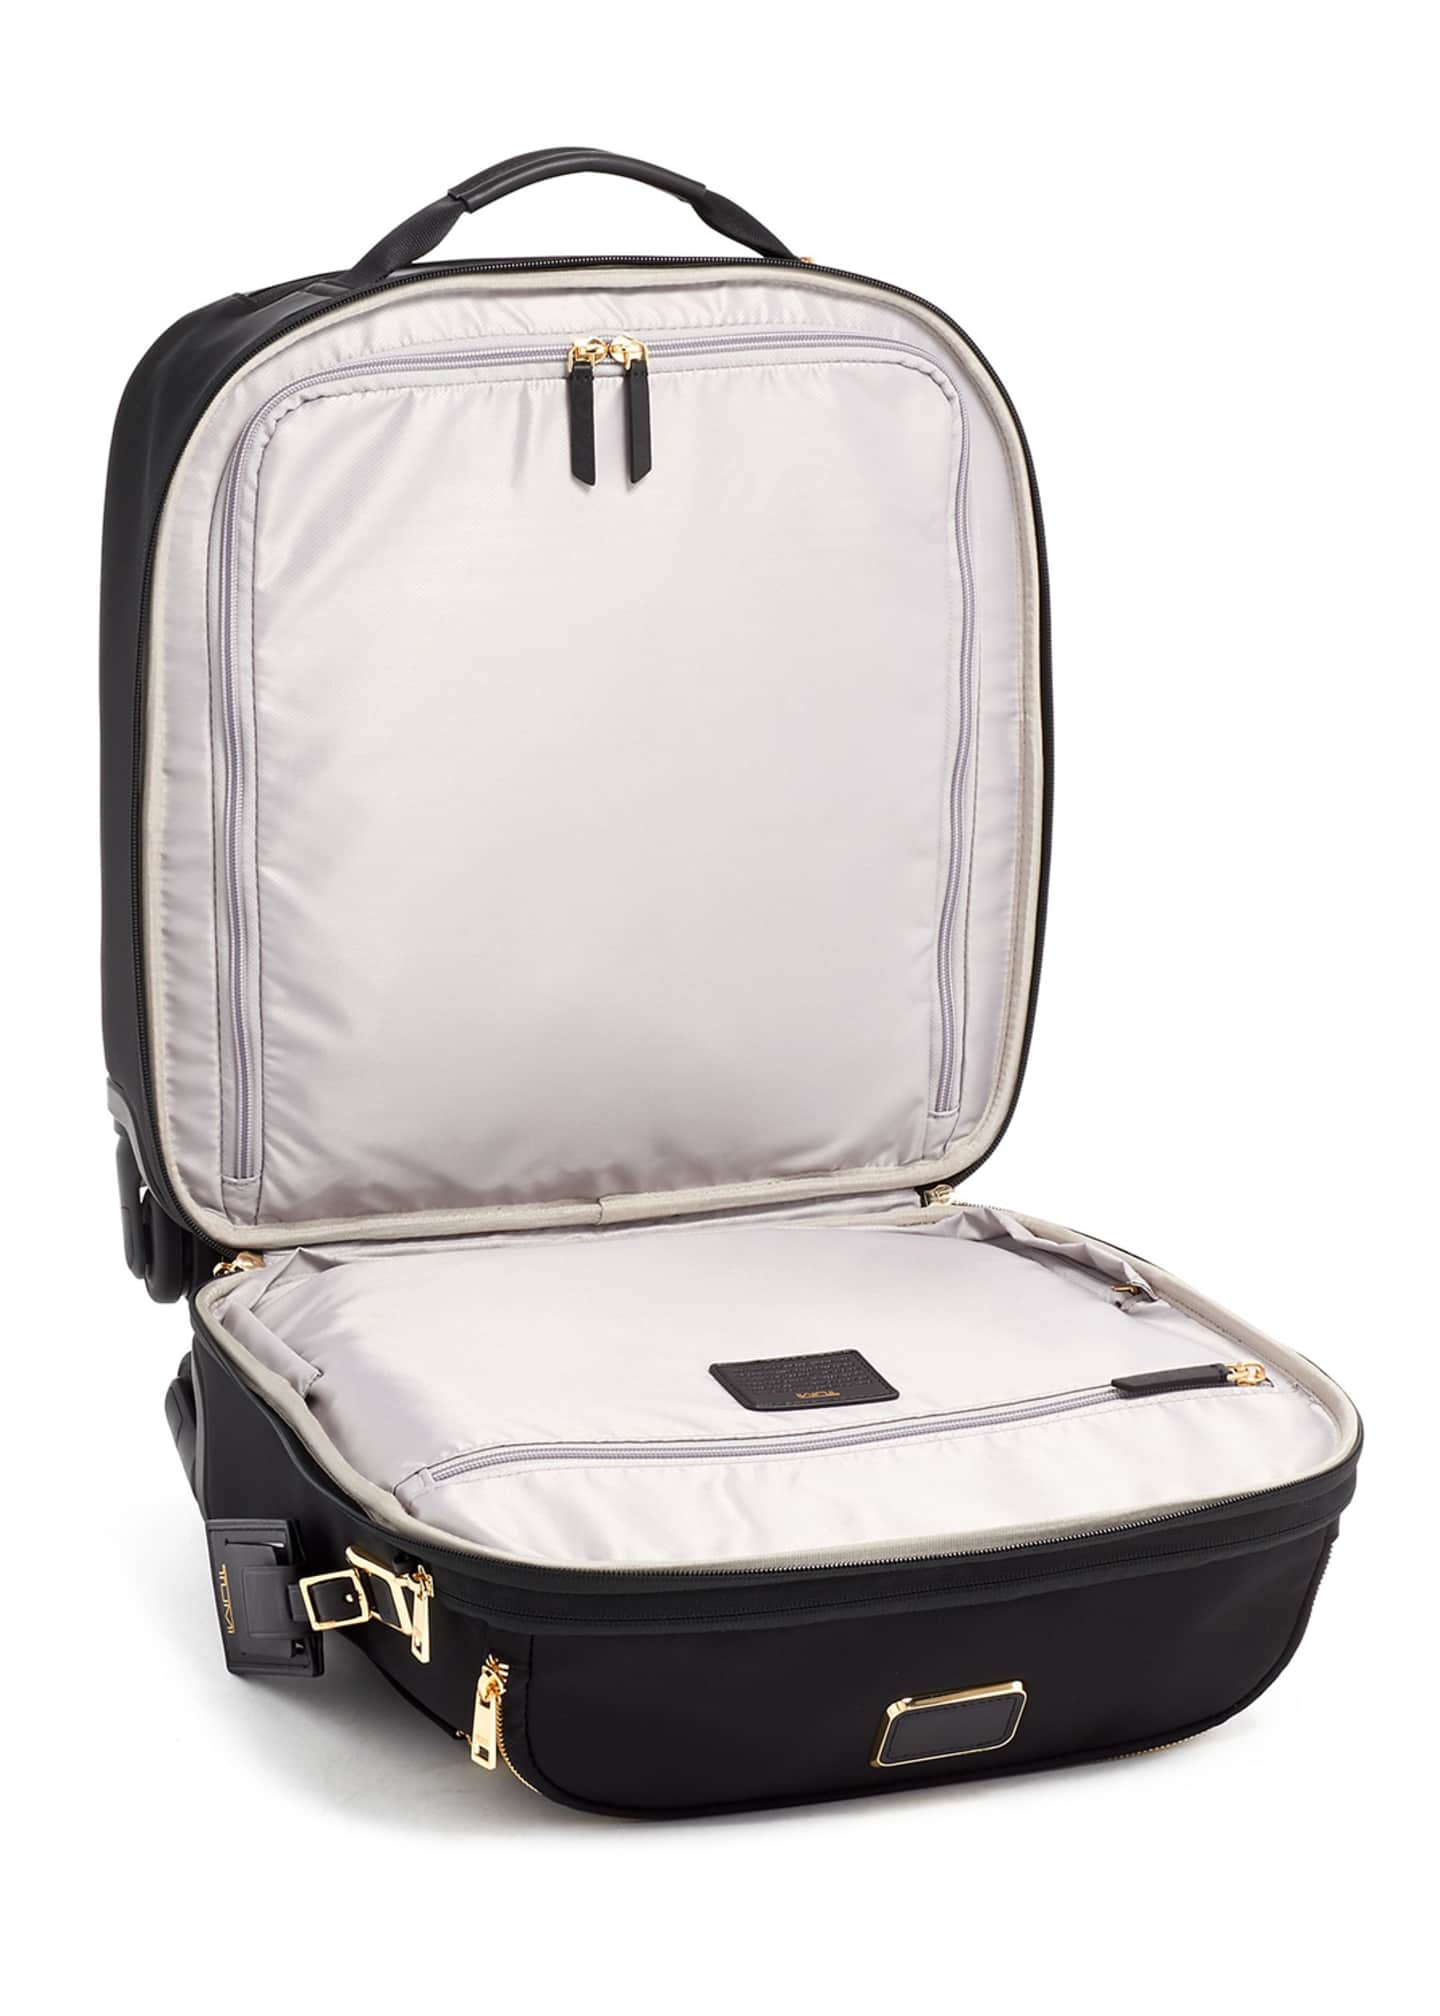 TUMI Oxford Compact Carry-On Luggage, Black - Bergdorf Goodman